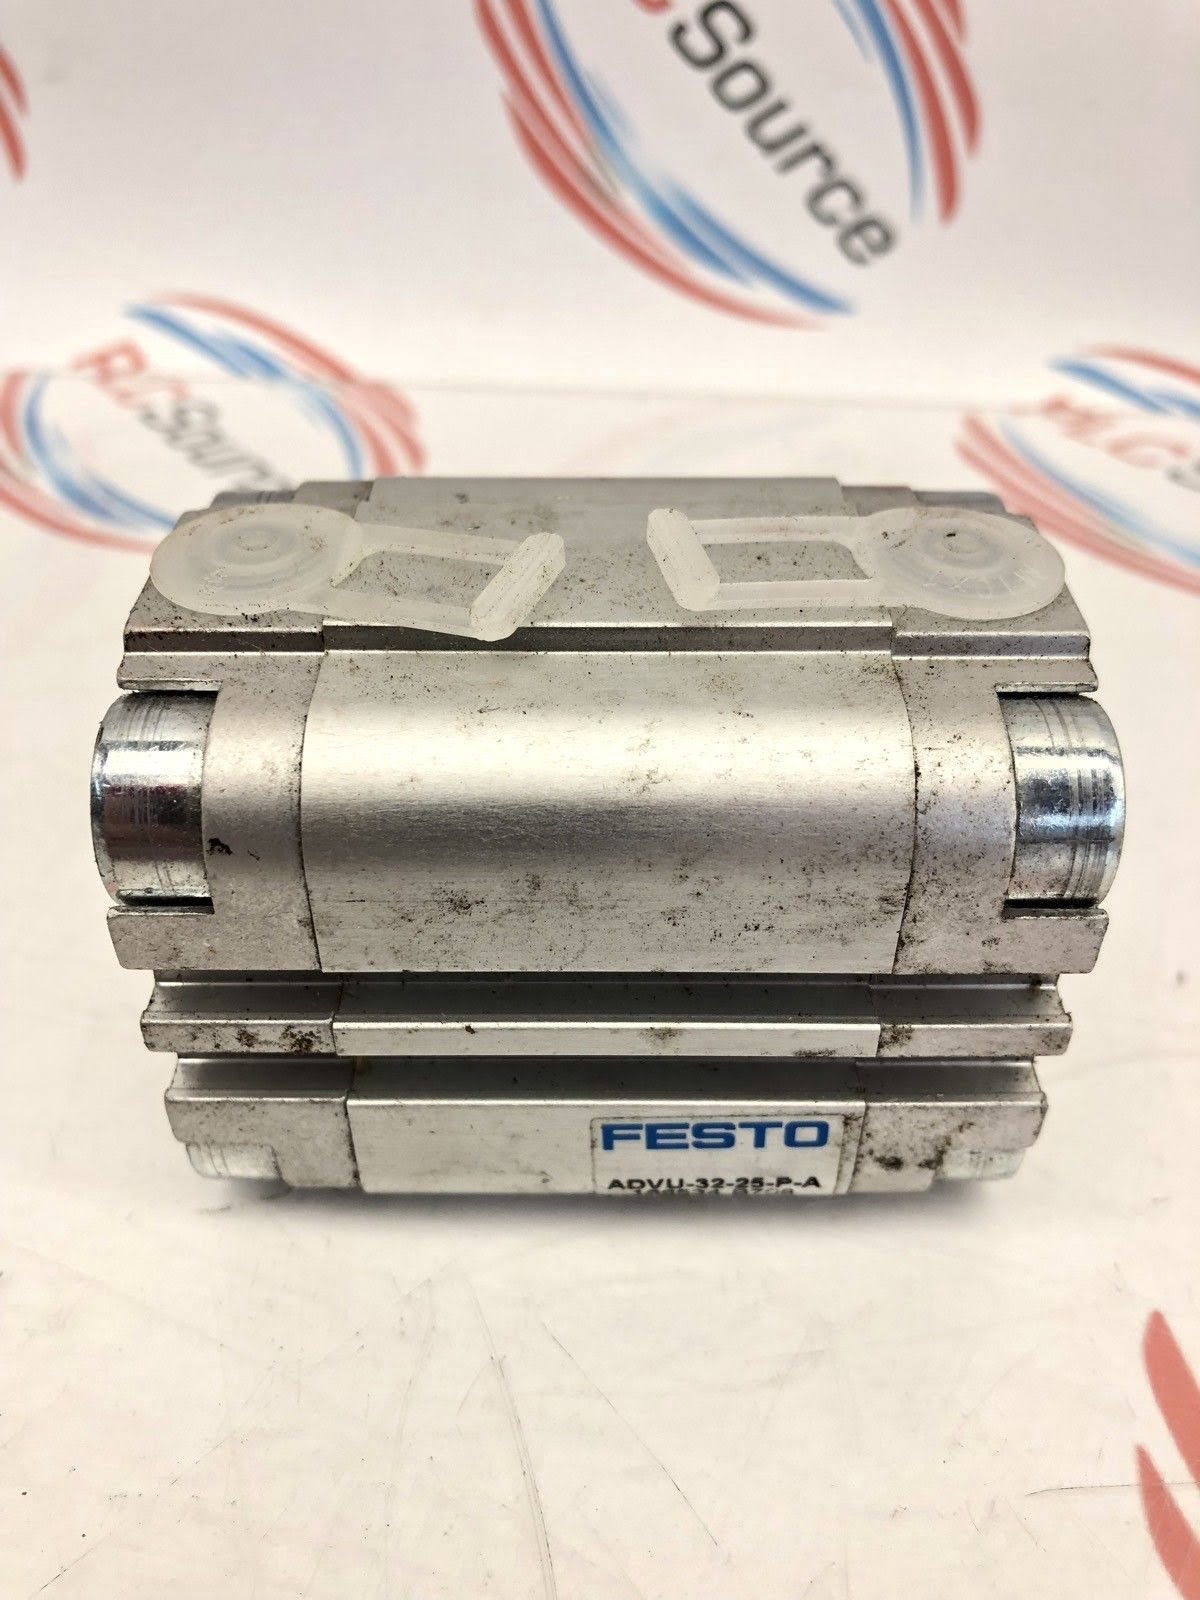 Details about   Festo Electric ADVULQ-32-40-P-A 156708 H760 Pneumatic Actuator 